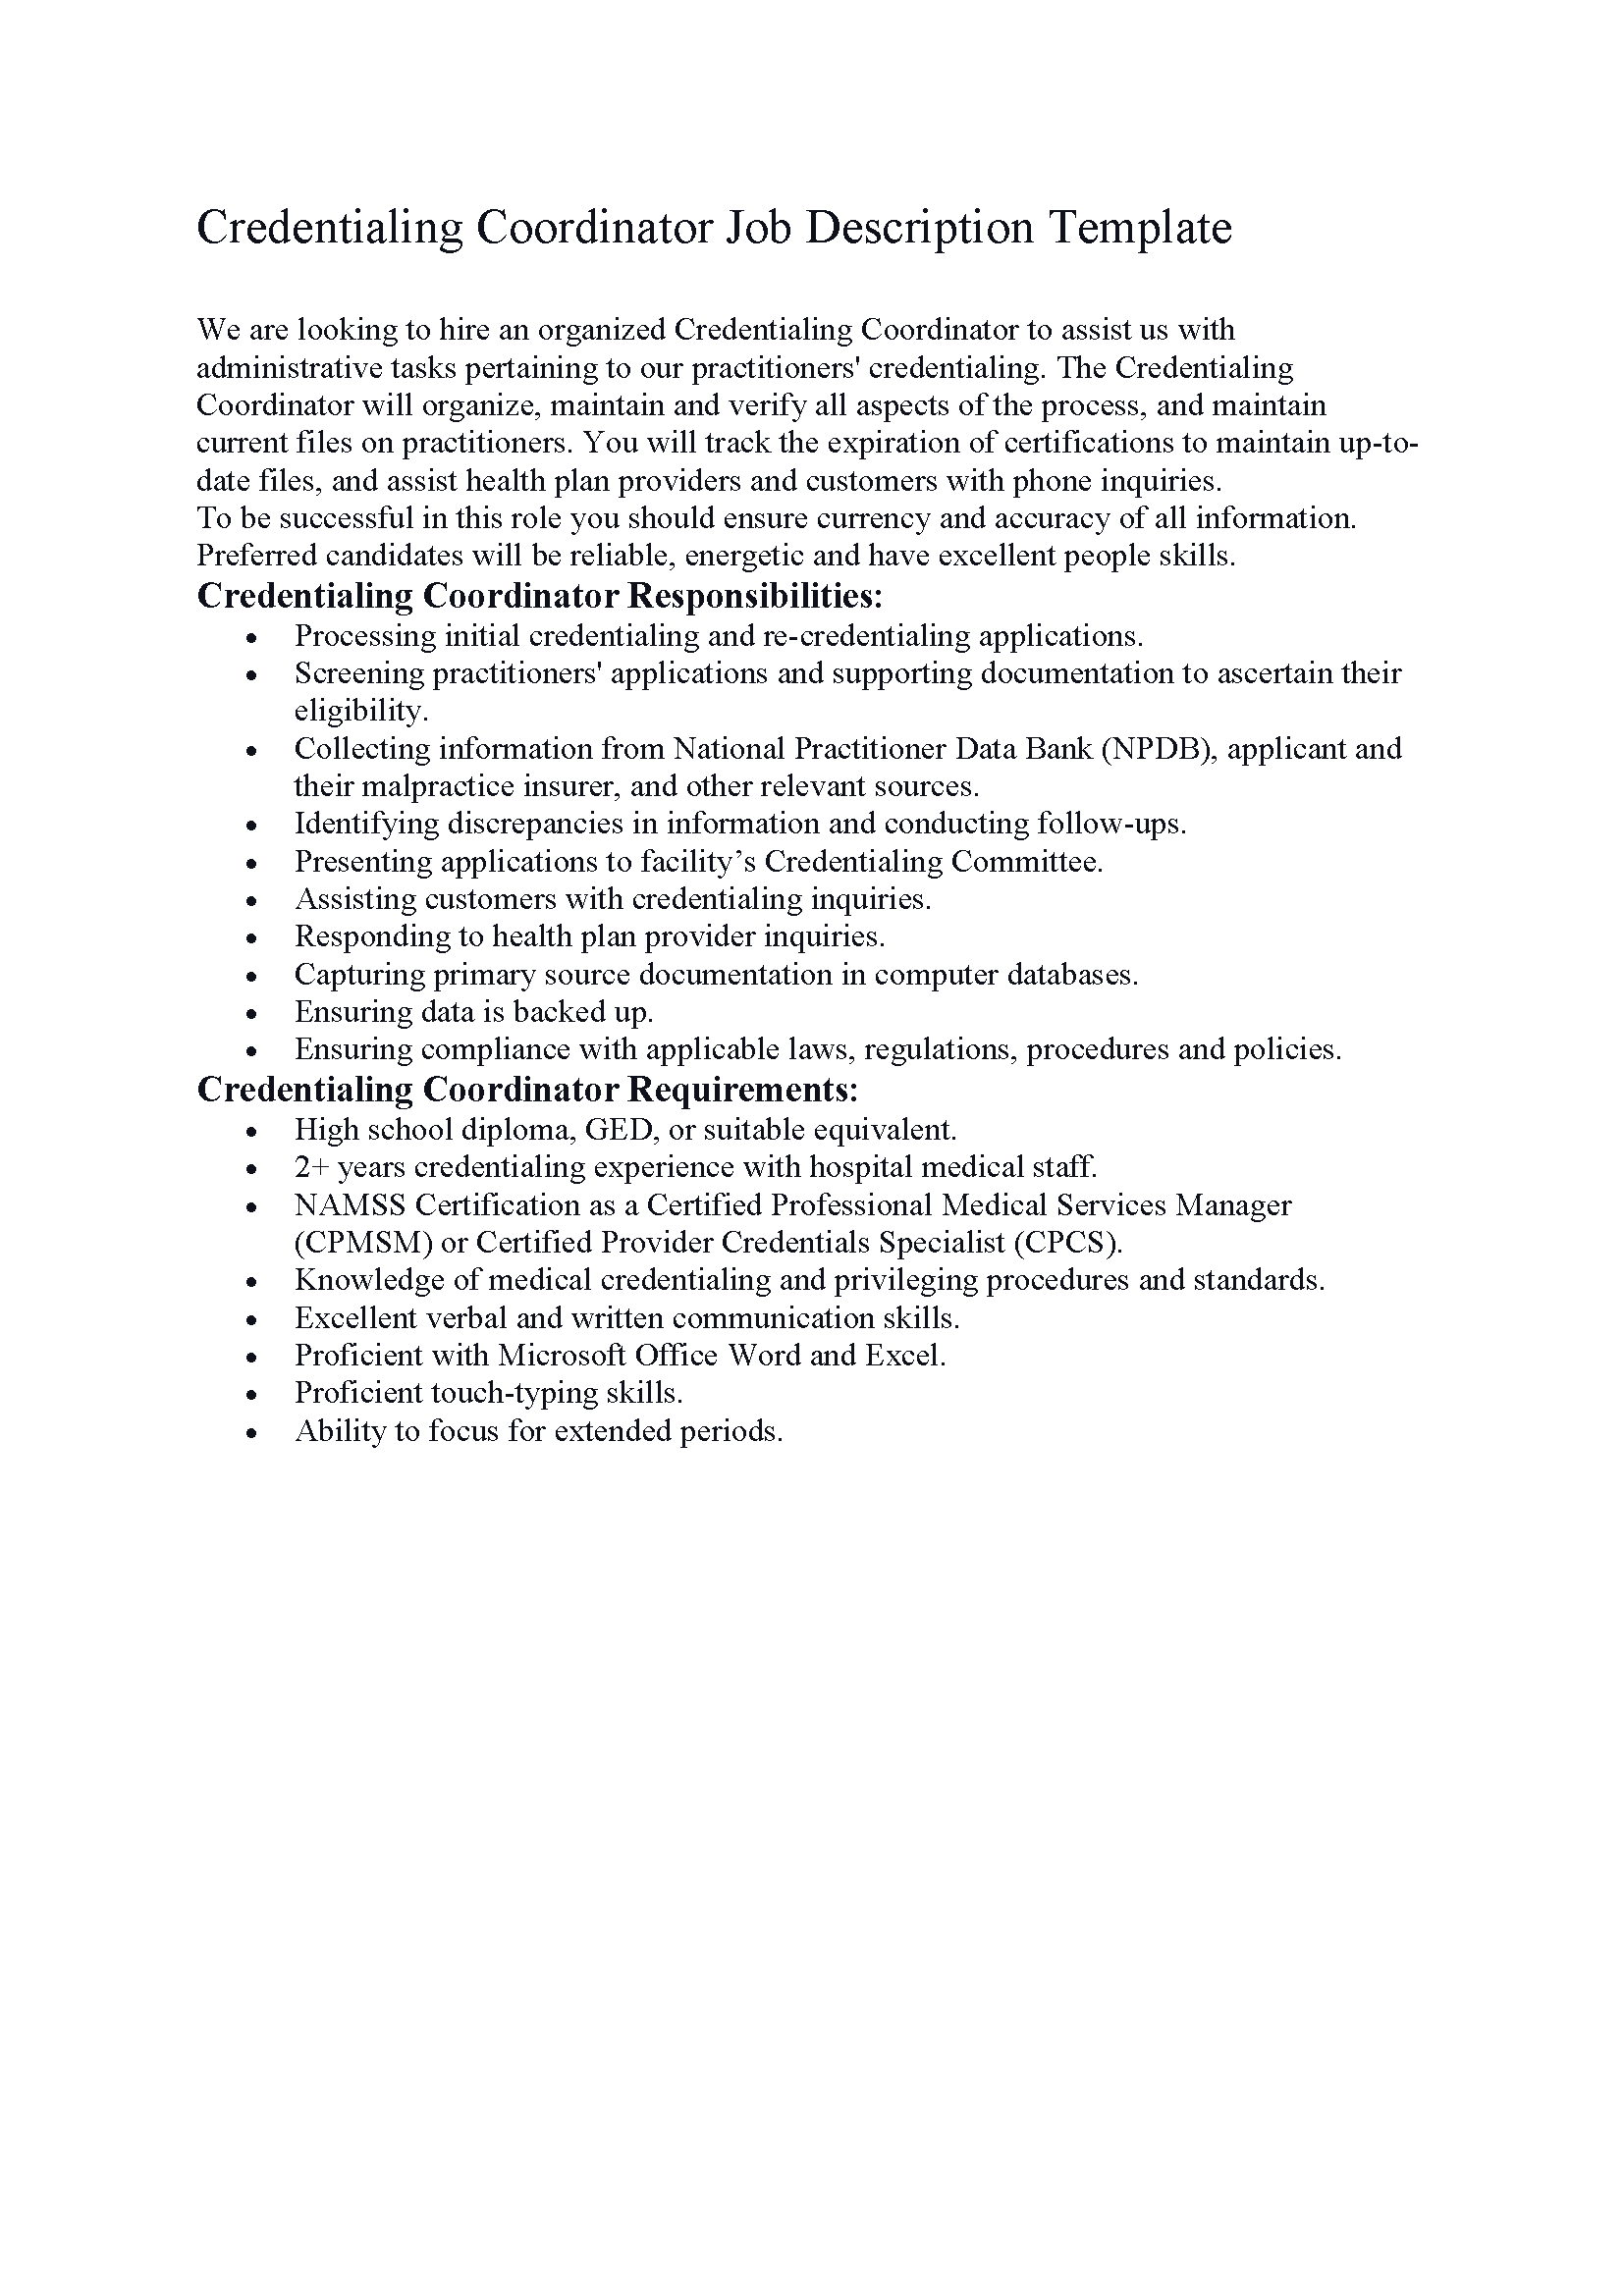 Credentialing Coordinator Job Description Template